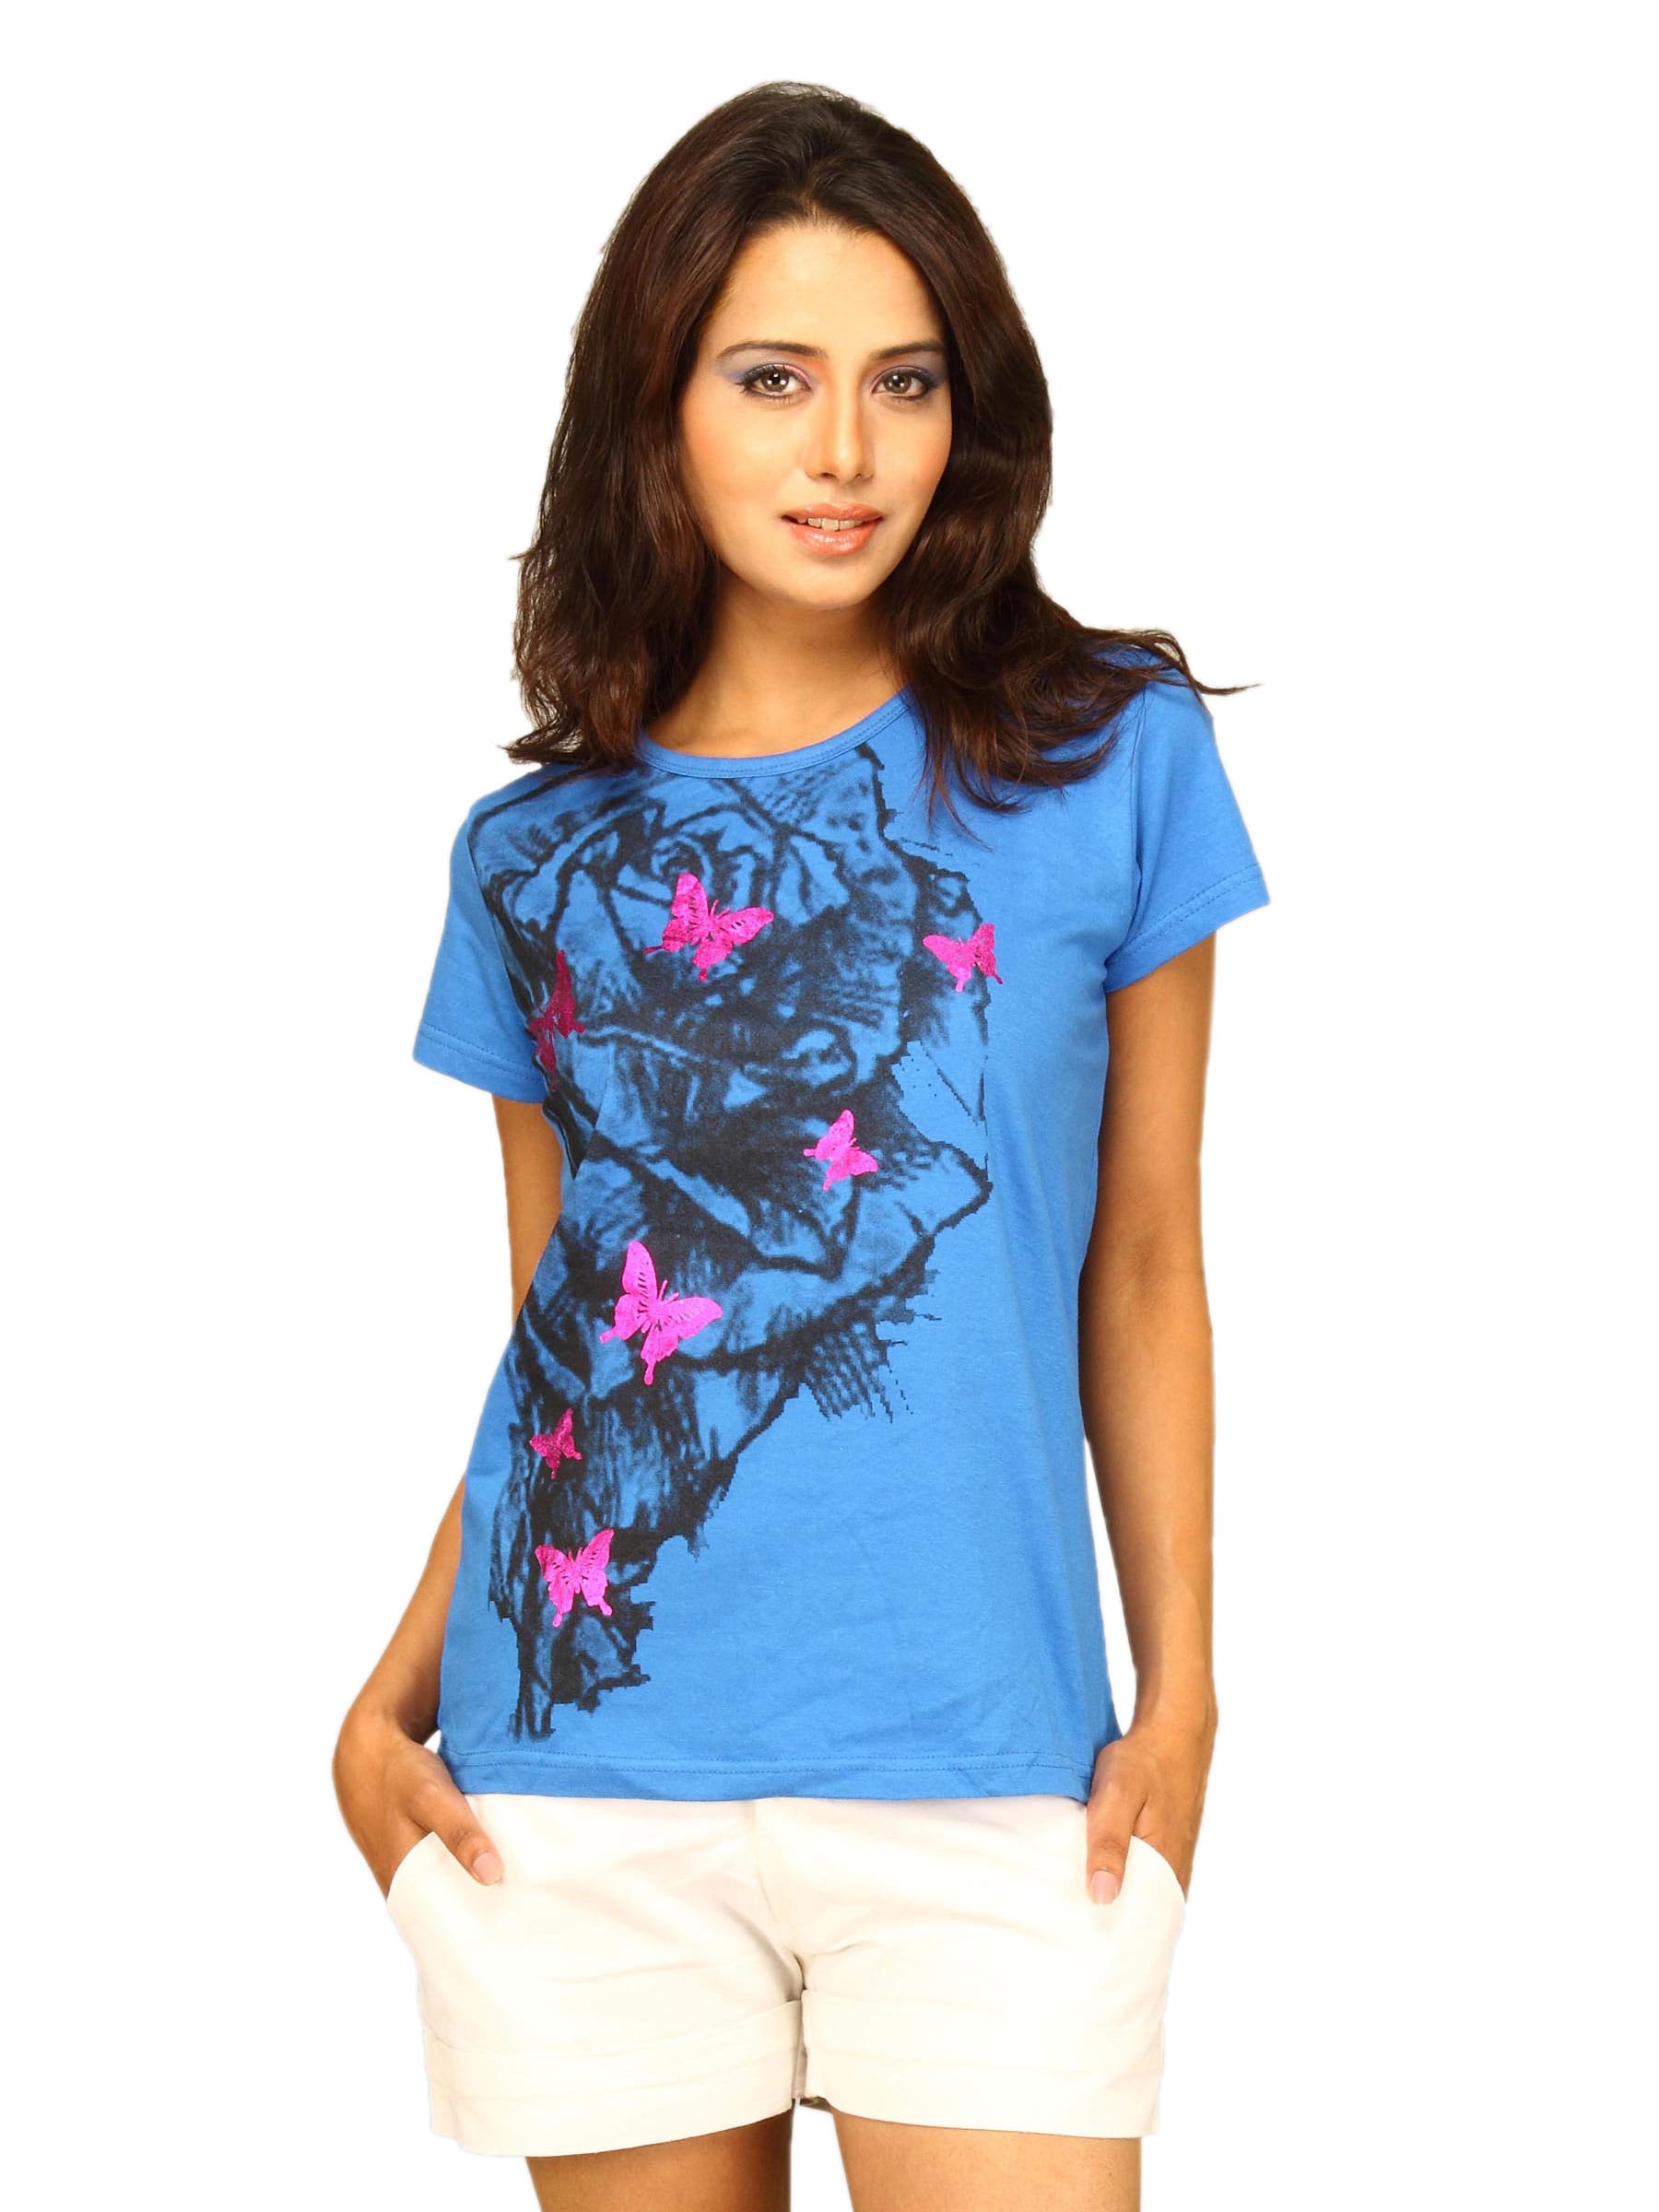 Jealous 21 Womens Blue Rose & Butterfly T-shirt